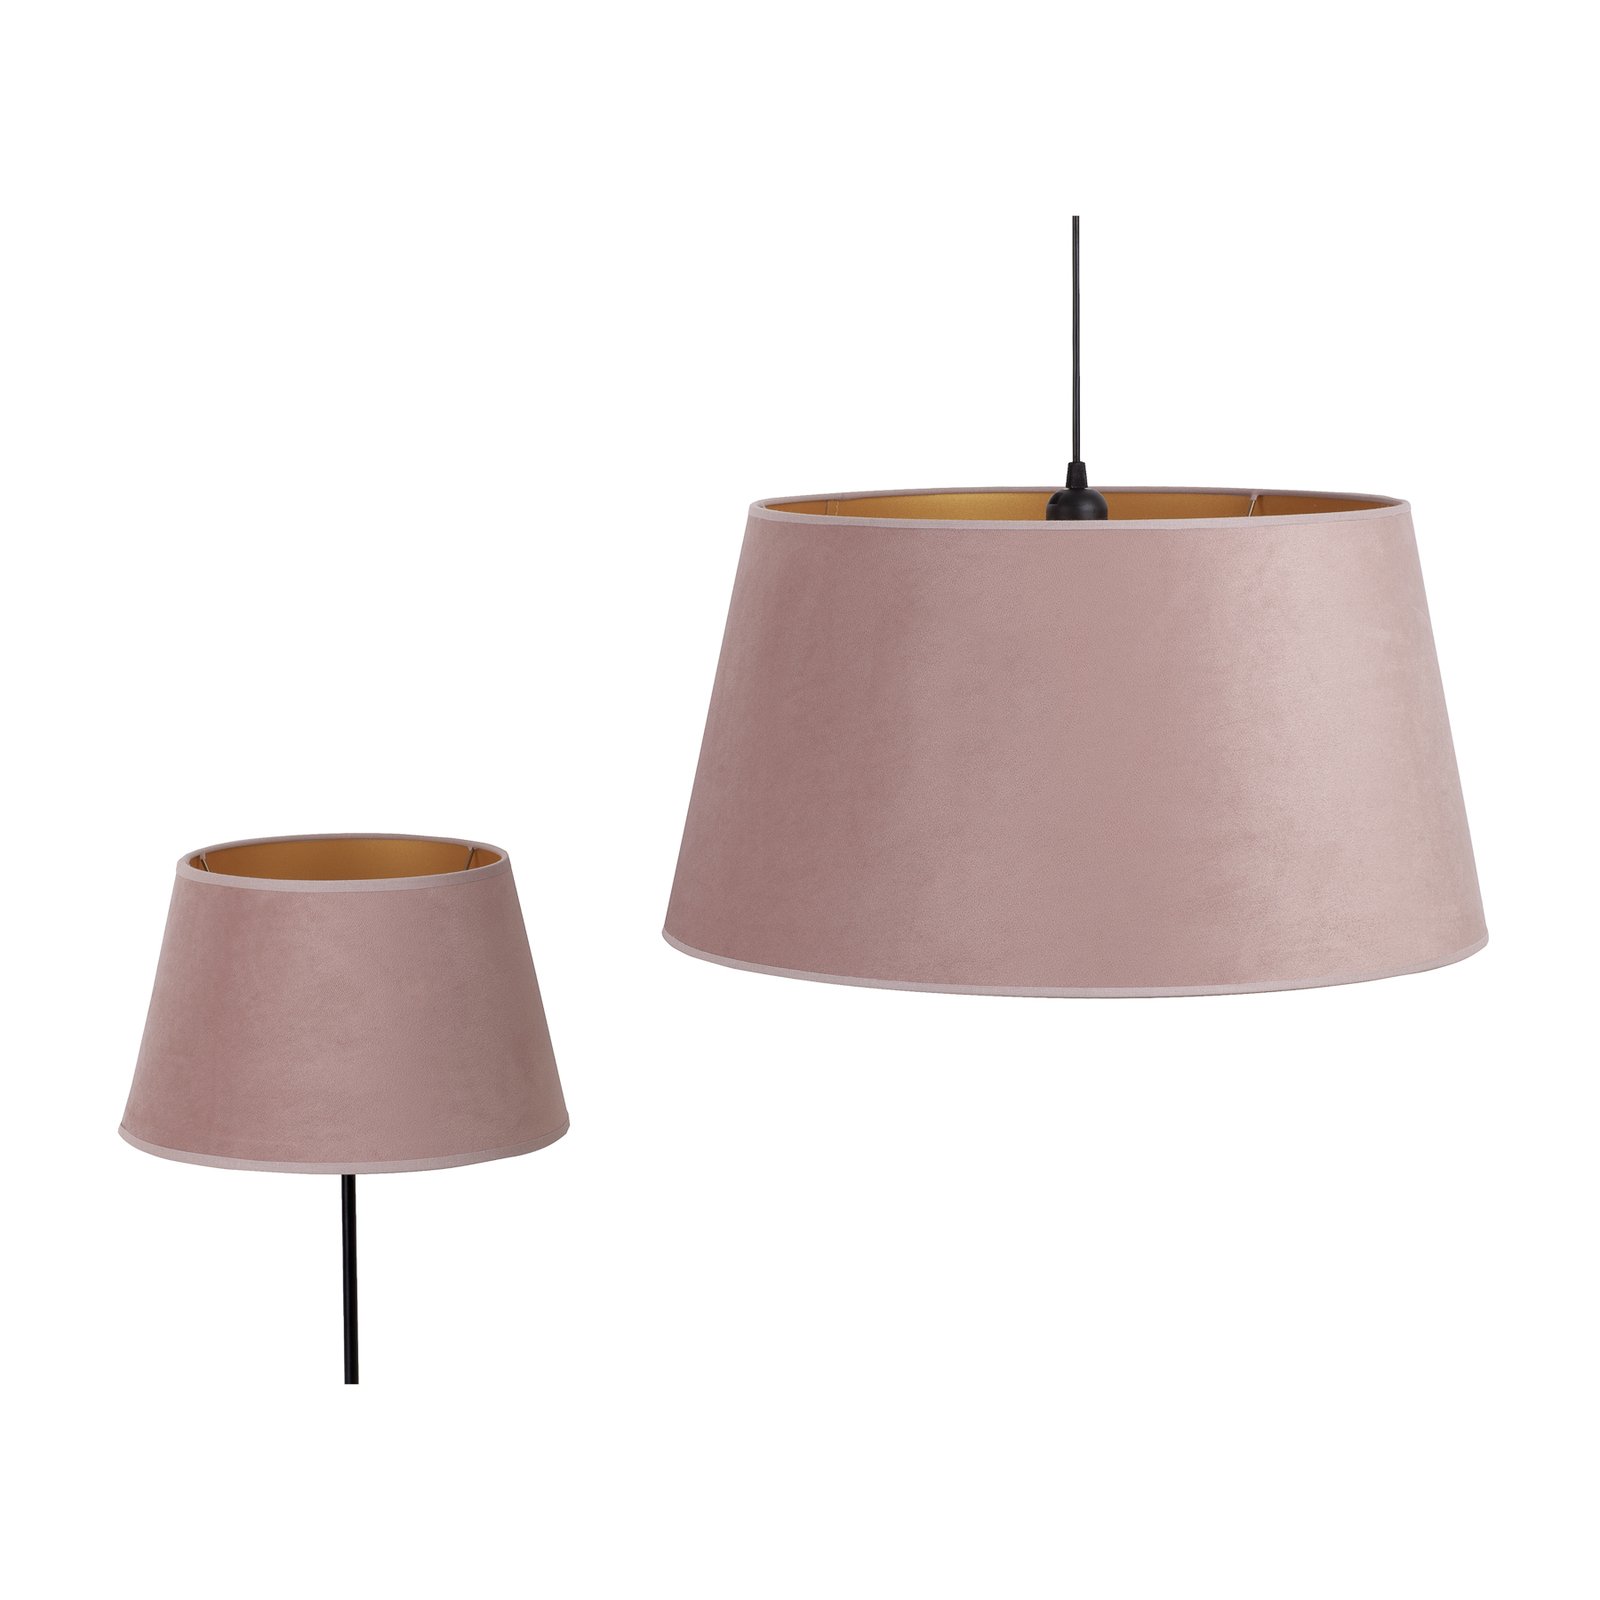 Lampenschirm Cone Höhe 25,5 cm, rosa/gold